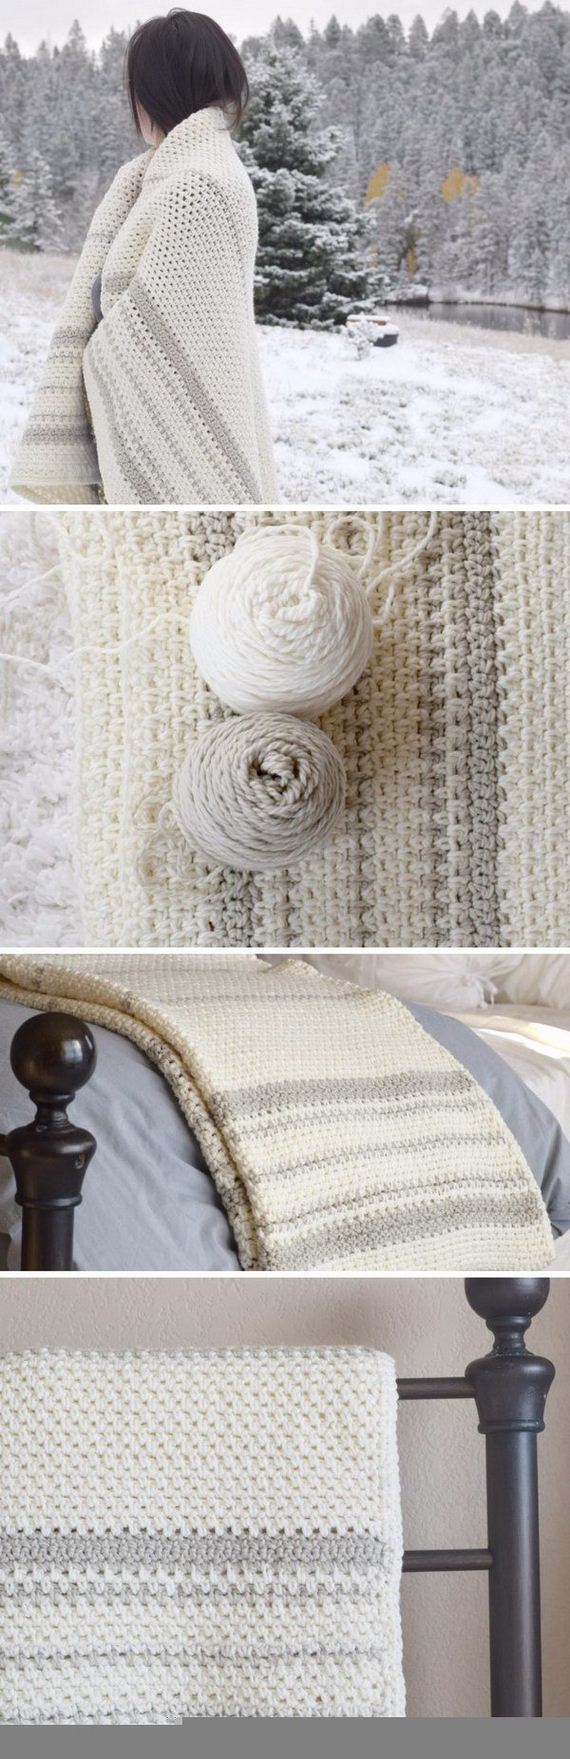 03-crochet-blankets